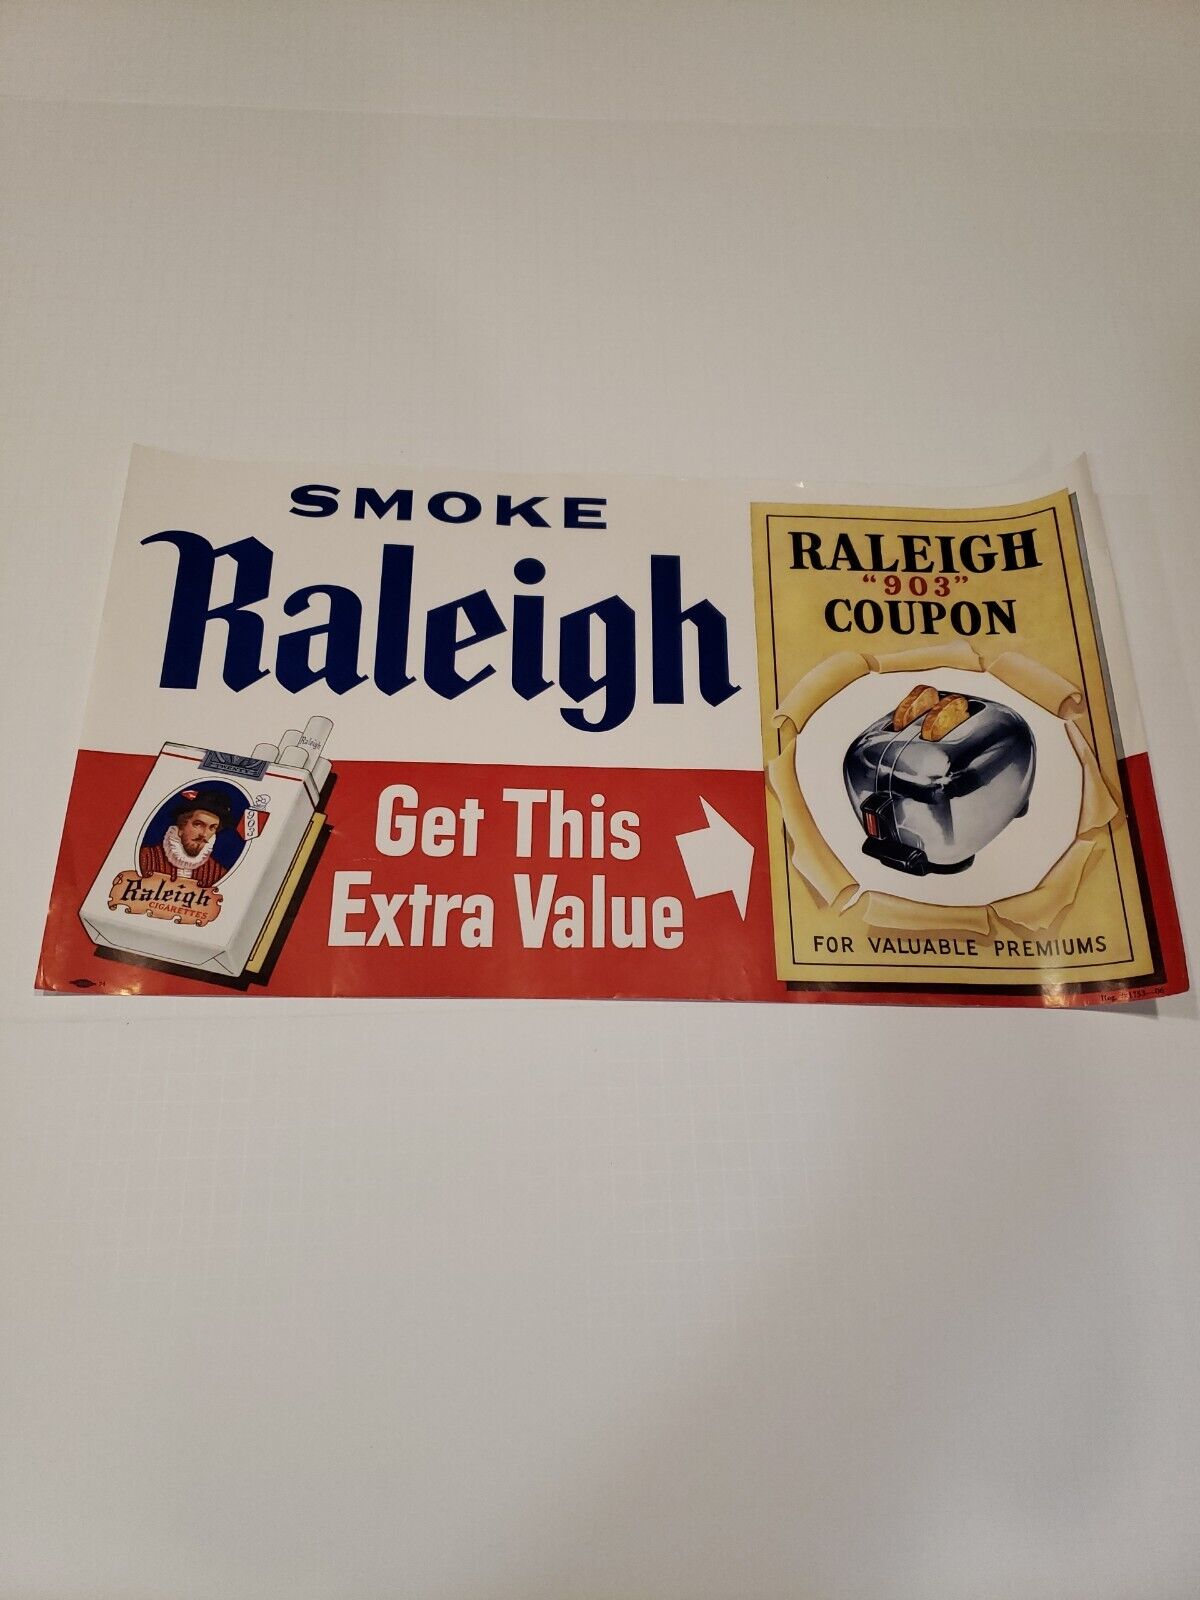 Antique Smoke Raleigh Advertising Poster 903 coupon reg #1753-06 - Rare - Look